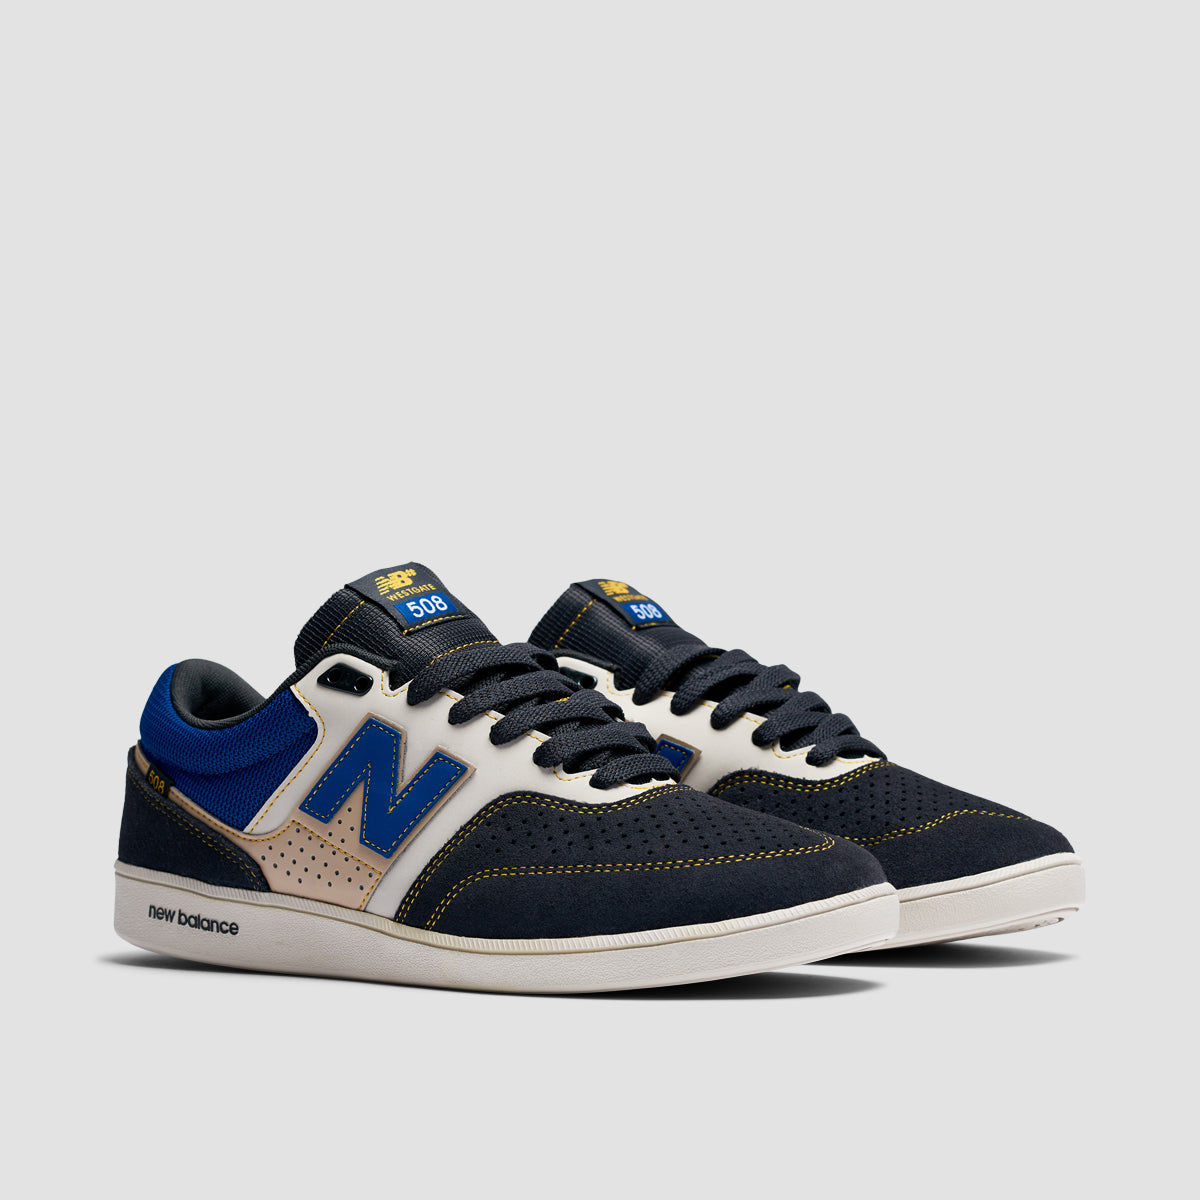 New Balance Numerice Brandon Westgate 508 Shoes - Navy/Royal Blue